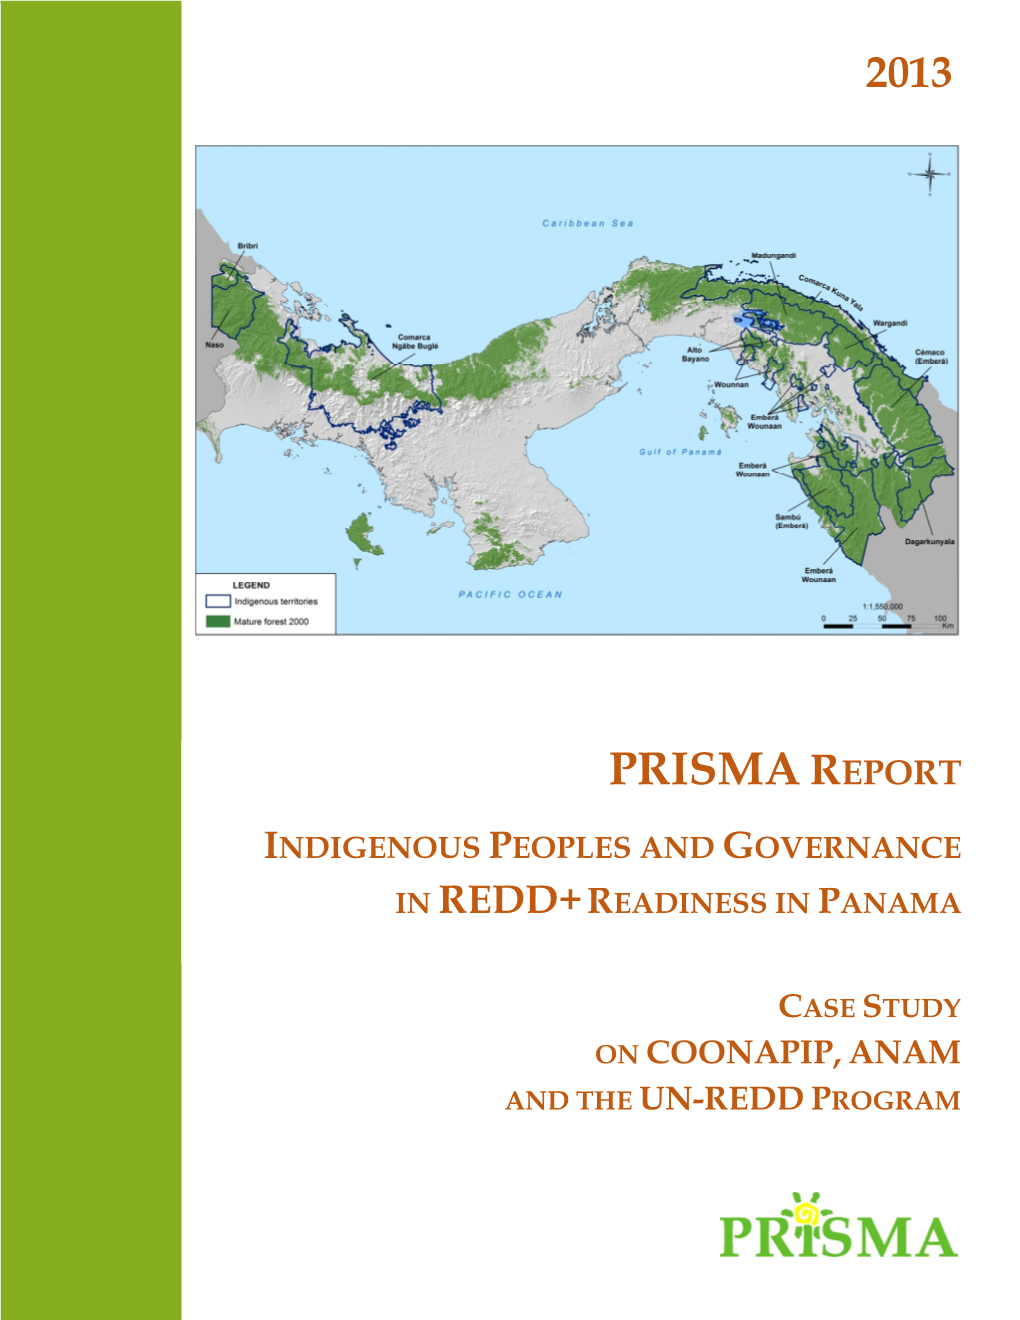 Prisma Report